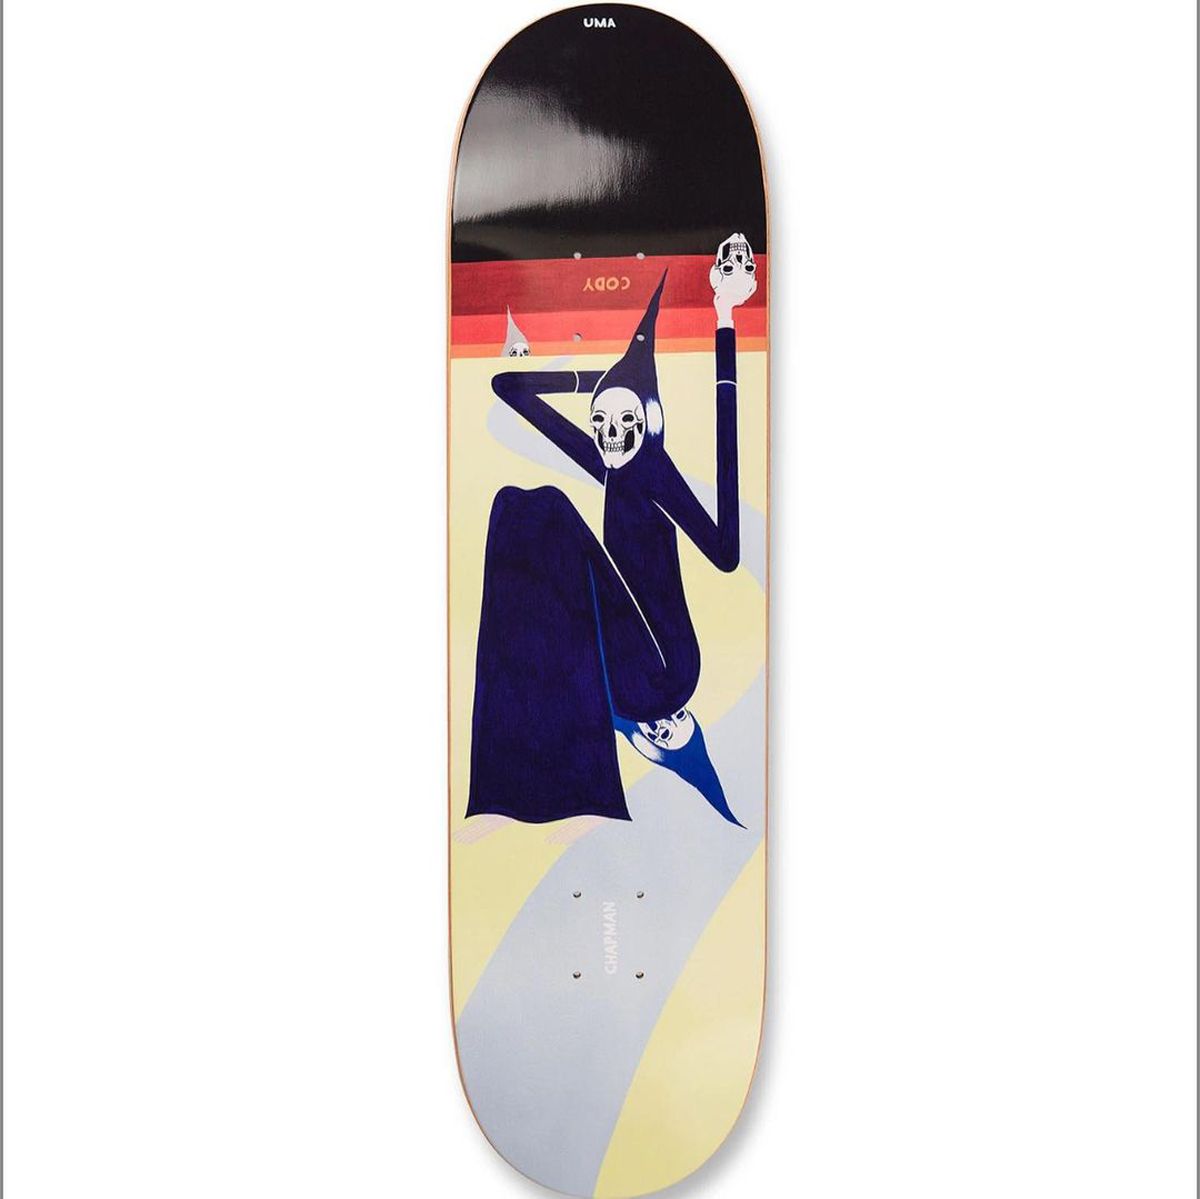 Richard Colman X Uma Skateboards 1